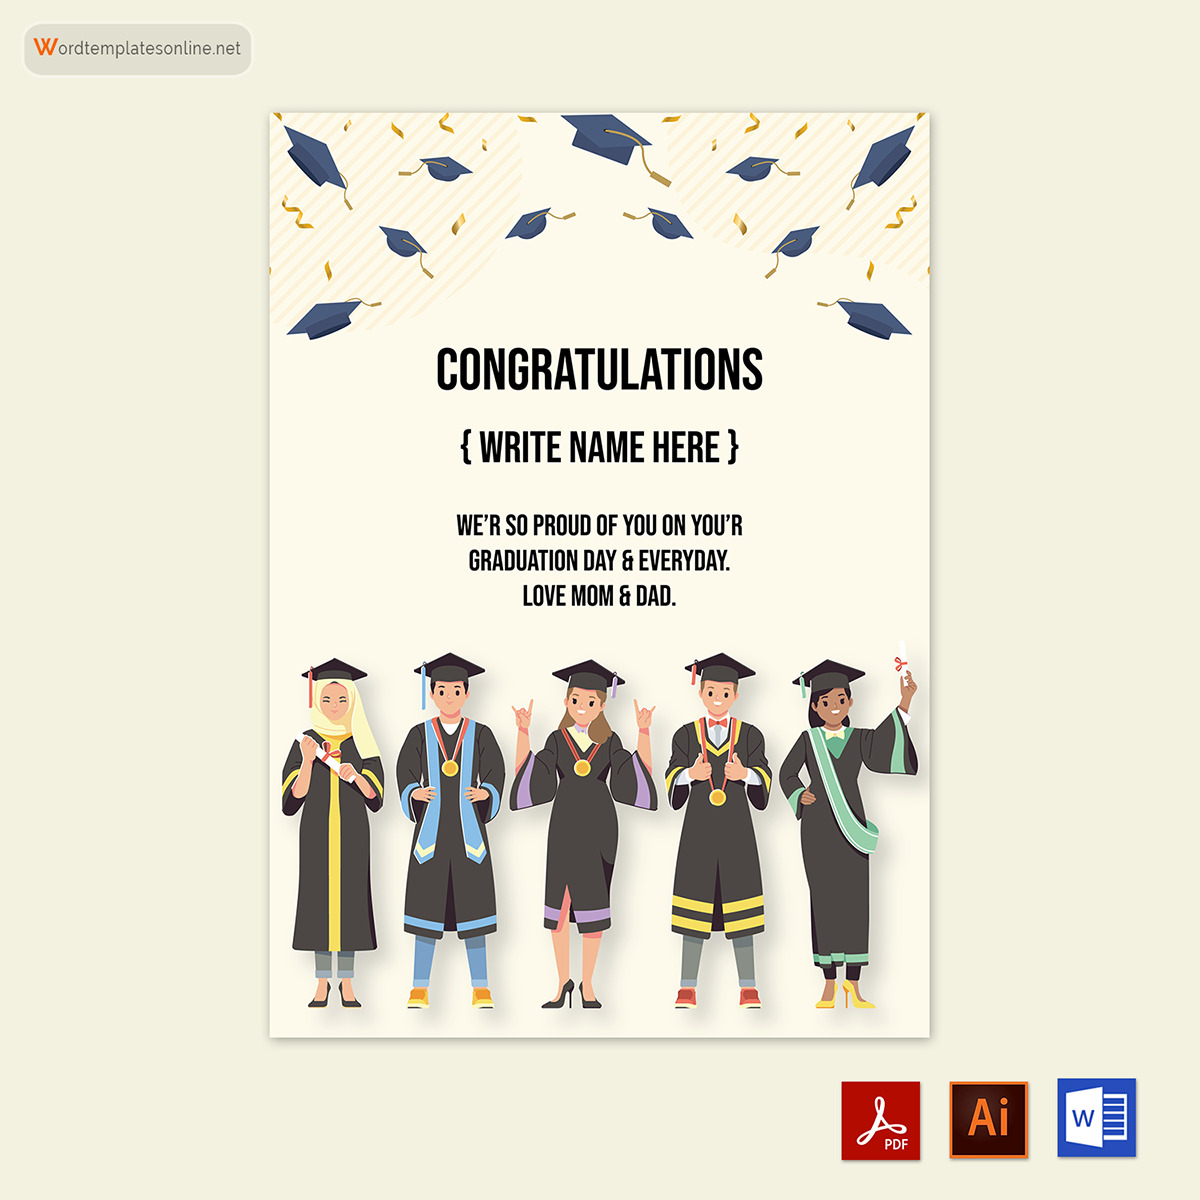 "Editable congratulations card template in PDF"